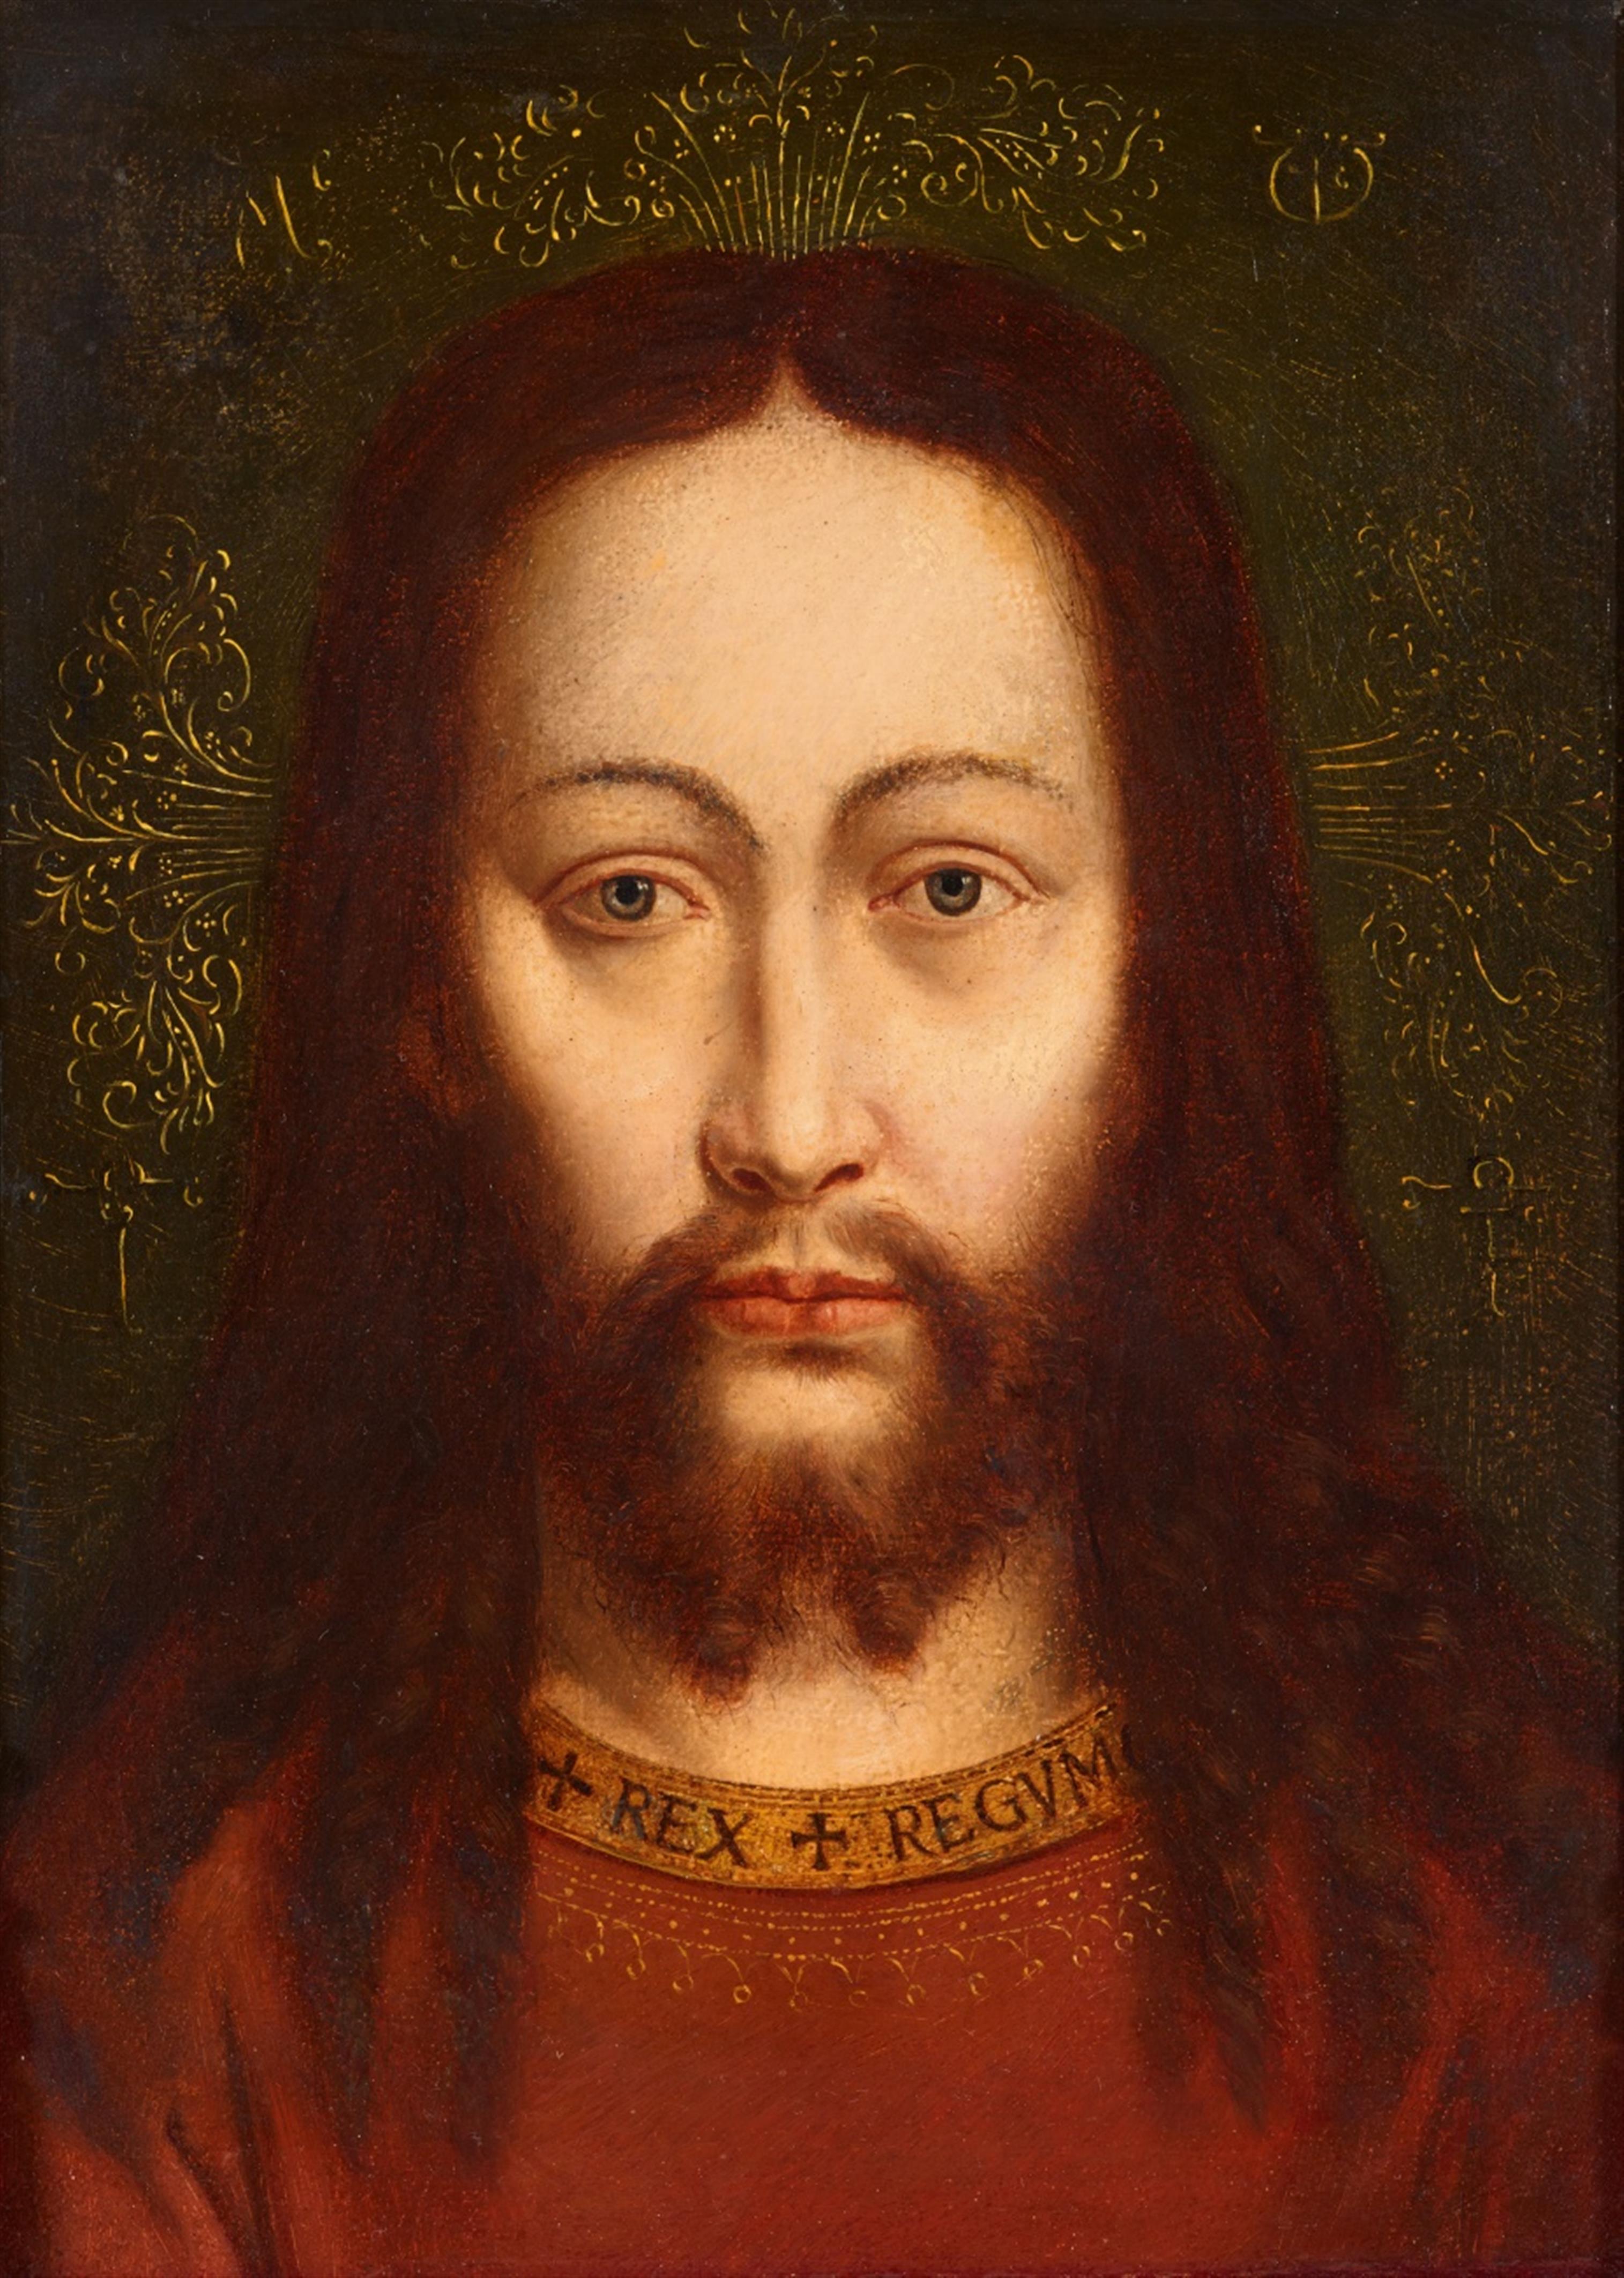 Flemish School 16th century - The Face of Christ - image-1